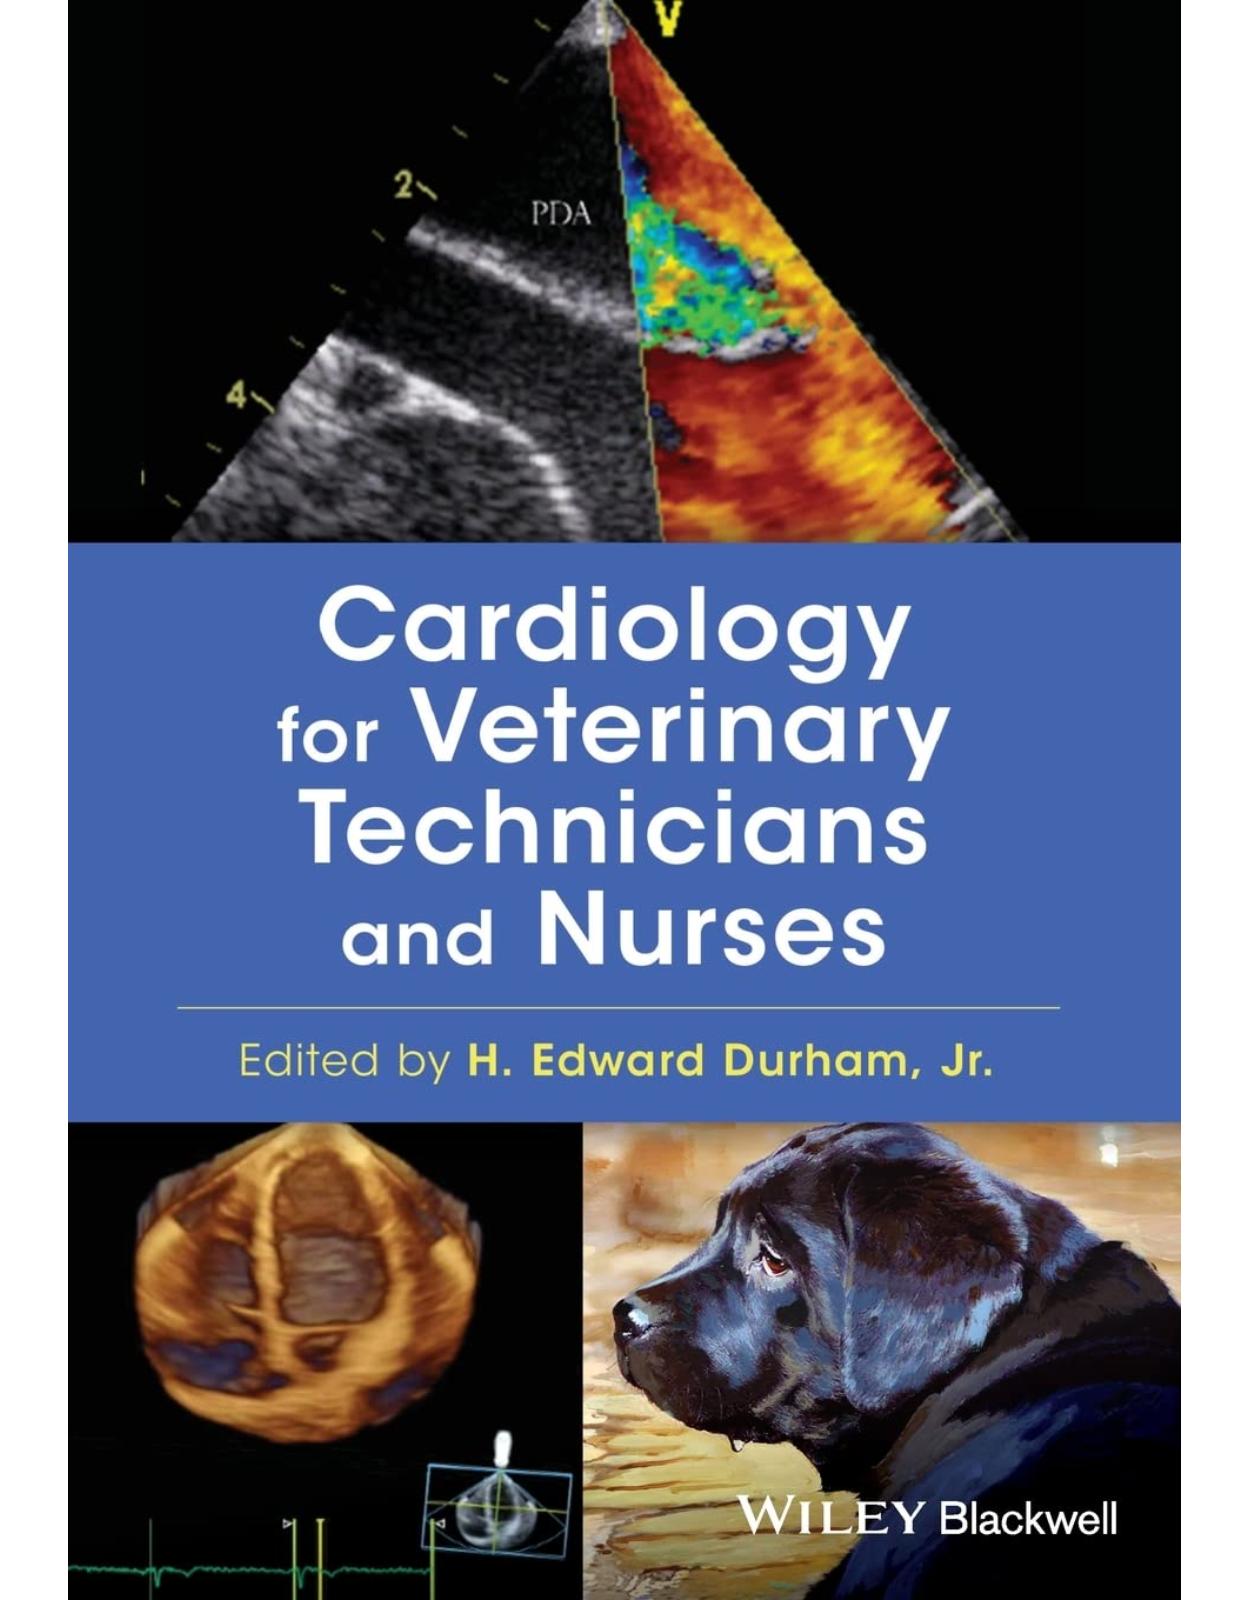 Cardiology for Veterinary Technicians and Nurses